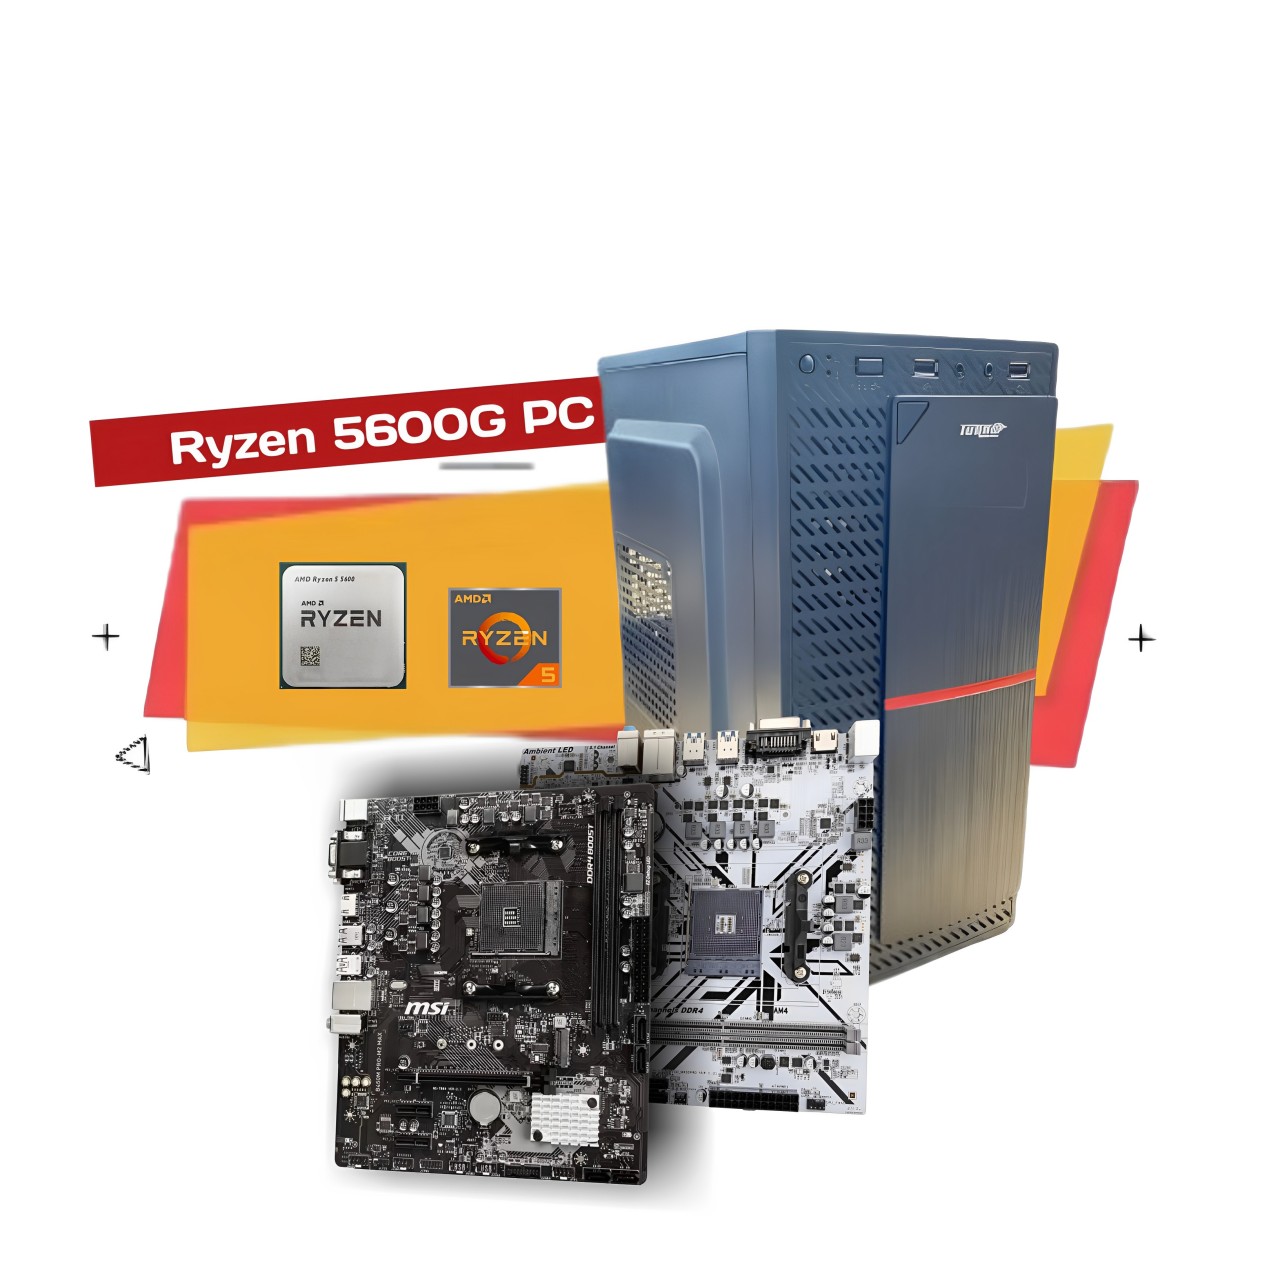 Ryzen 5600G Desktop PC Price in Bangladesh